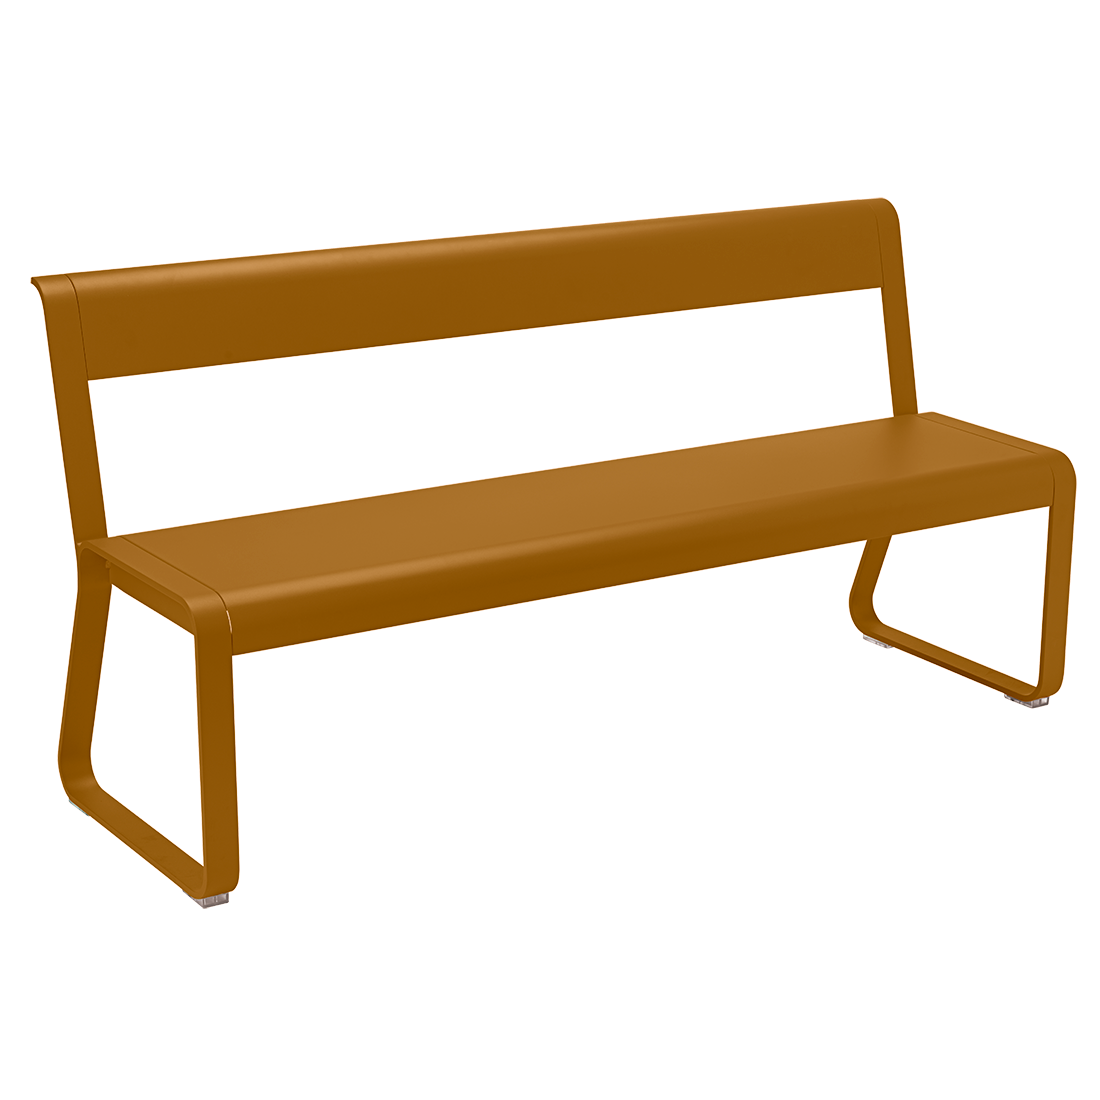 BELLEVIE bench with backrest